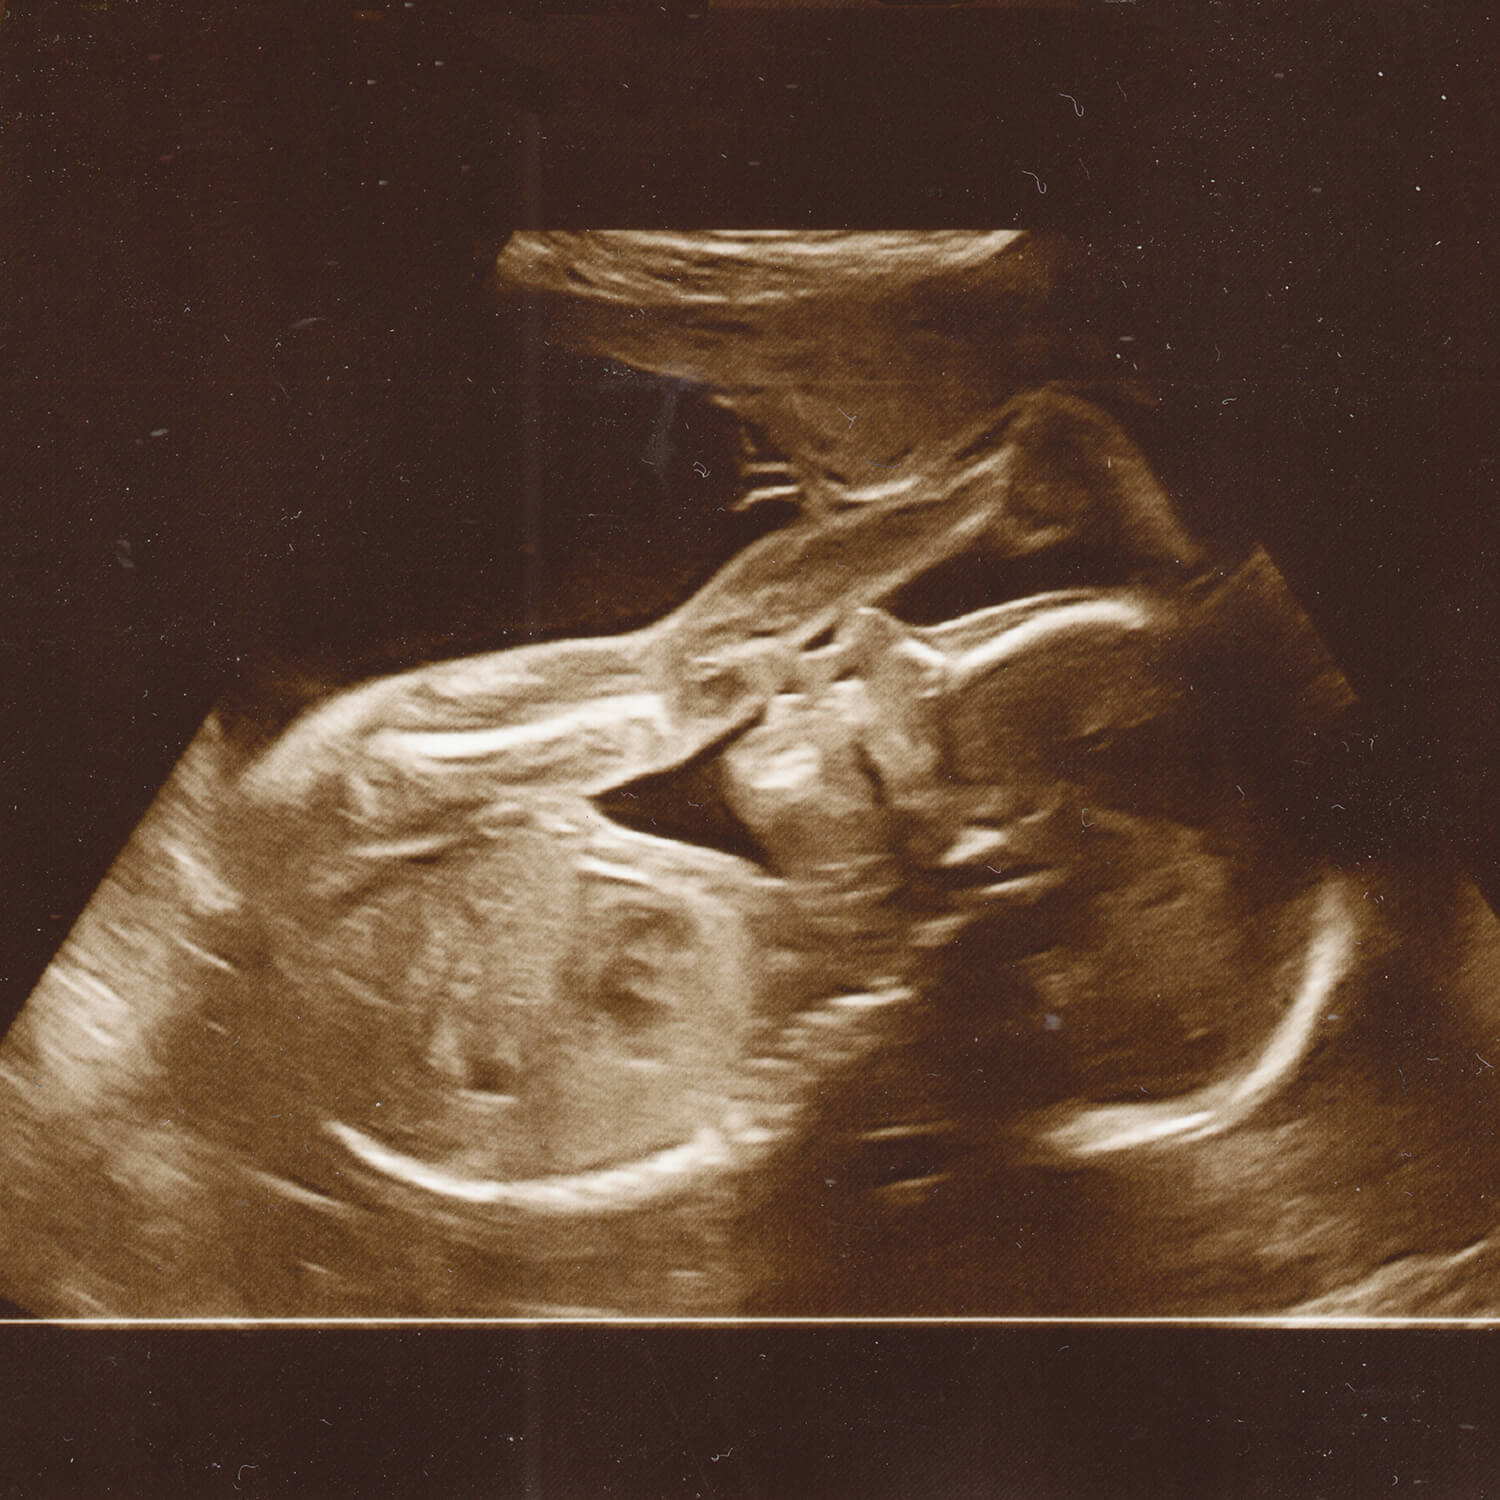 second trimester 20 week scan